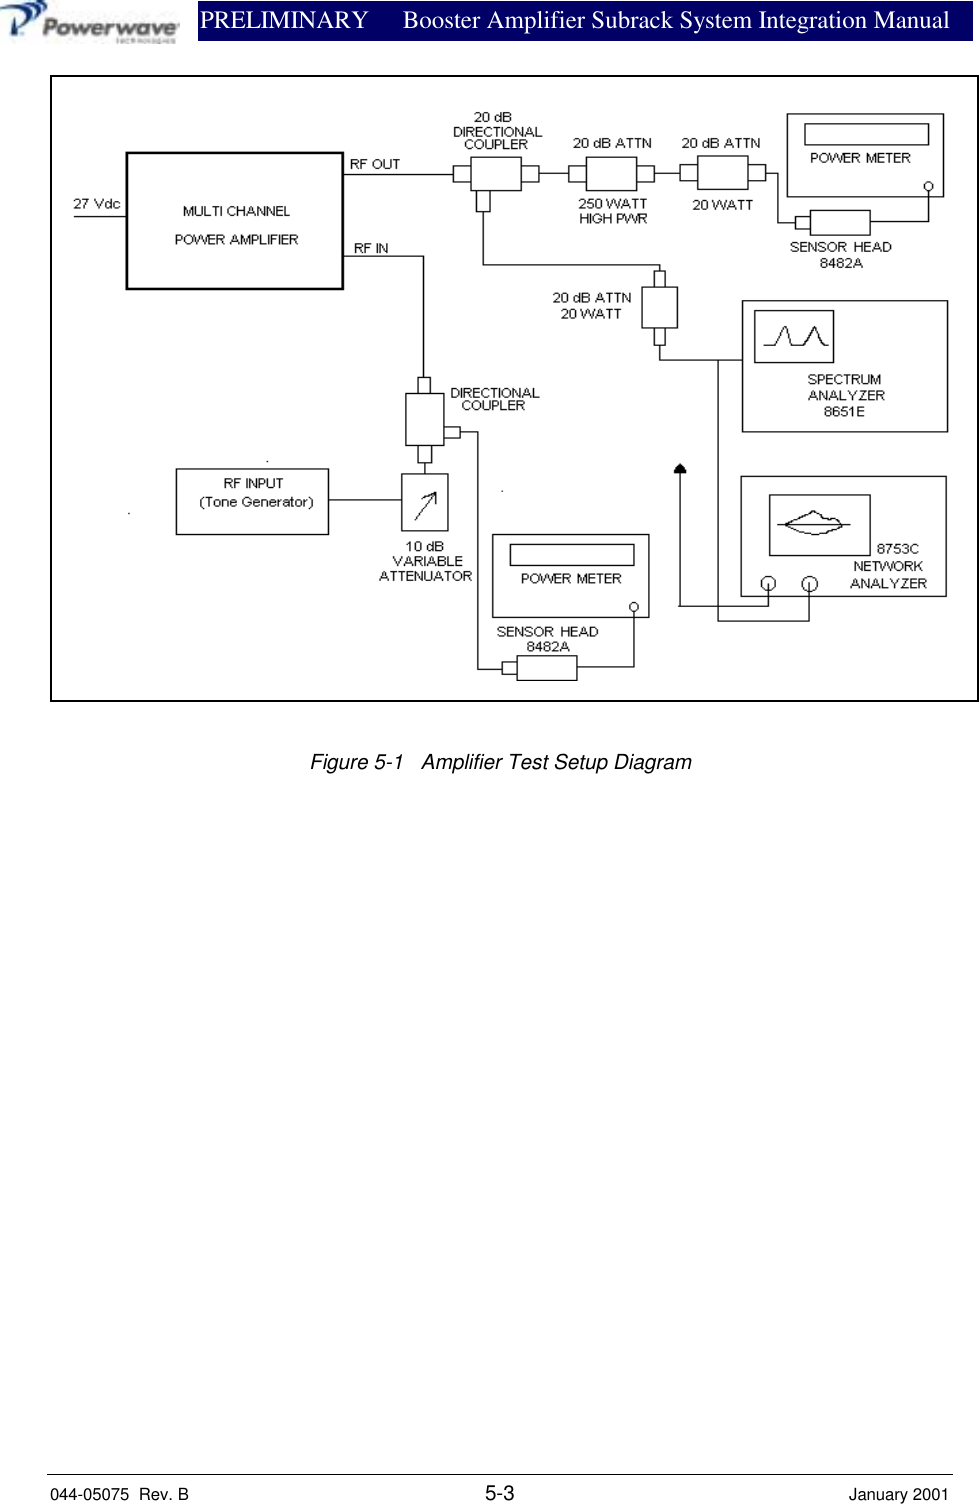                PRELIMINARY Booster Amplifier Subrack System Integration Manual044-05075  Rev. B 5-3 January 2001Figure 5-1   Amplifier Test Setup Diagram